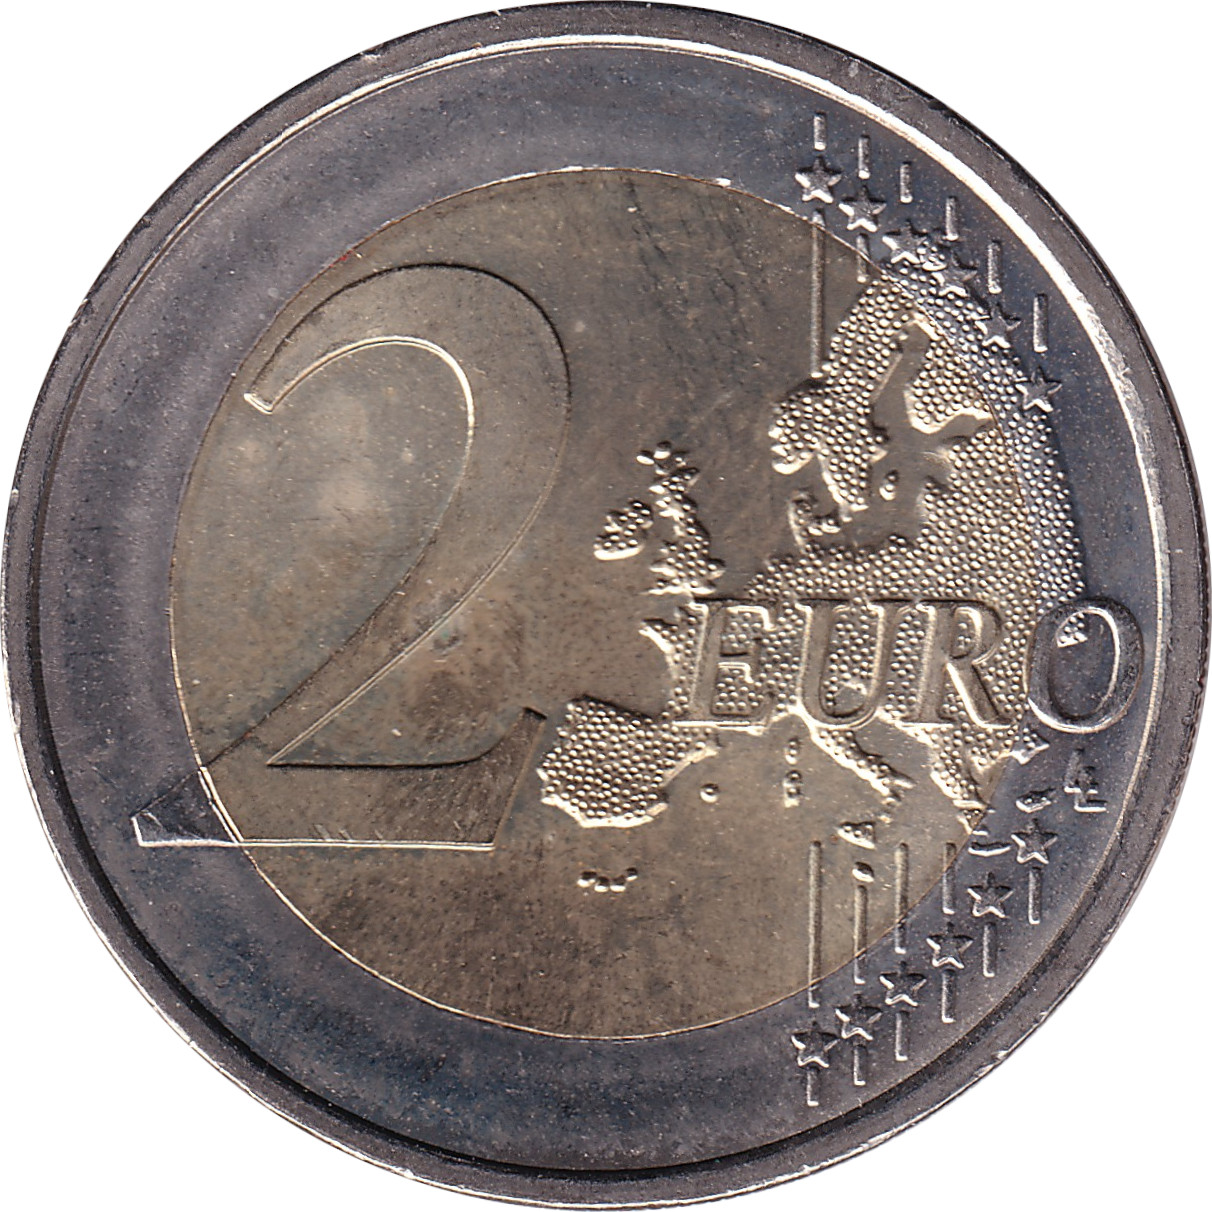 2 euro - Bank of Austria - 200 years